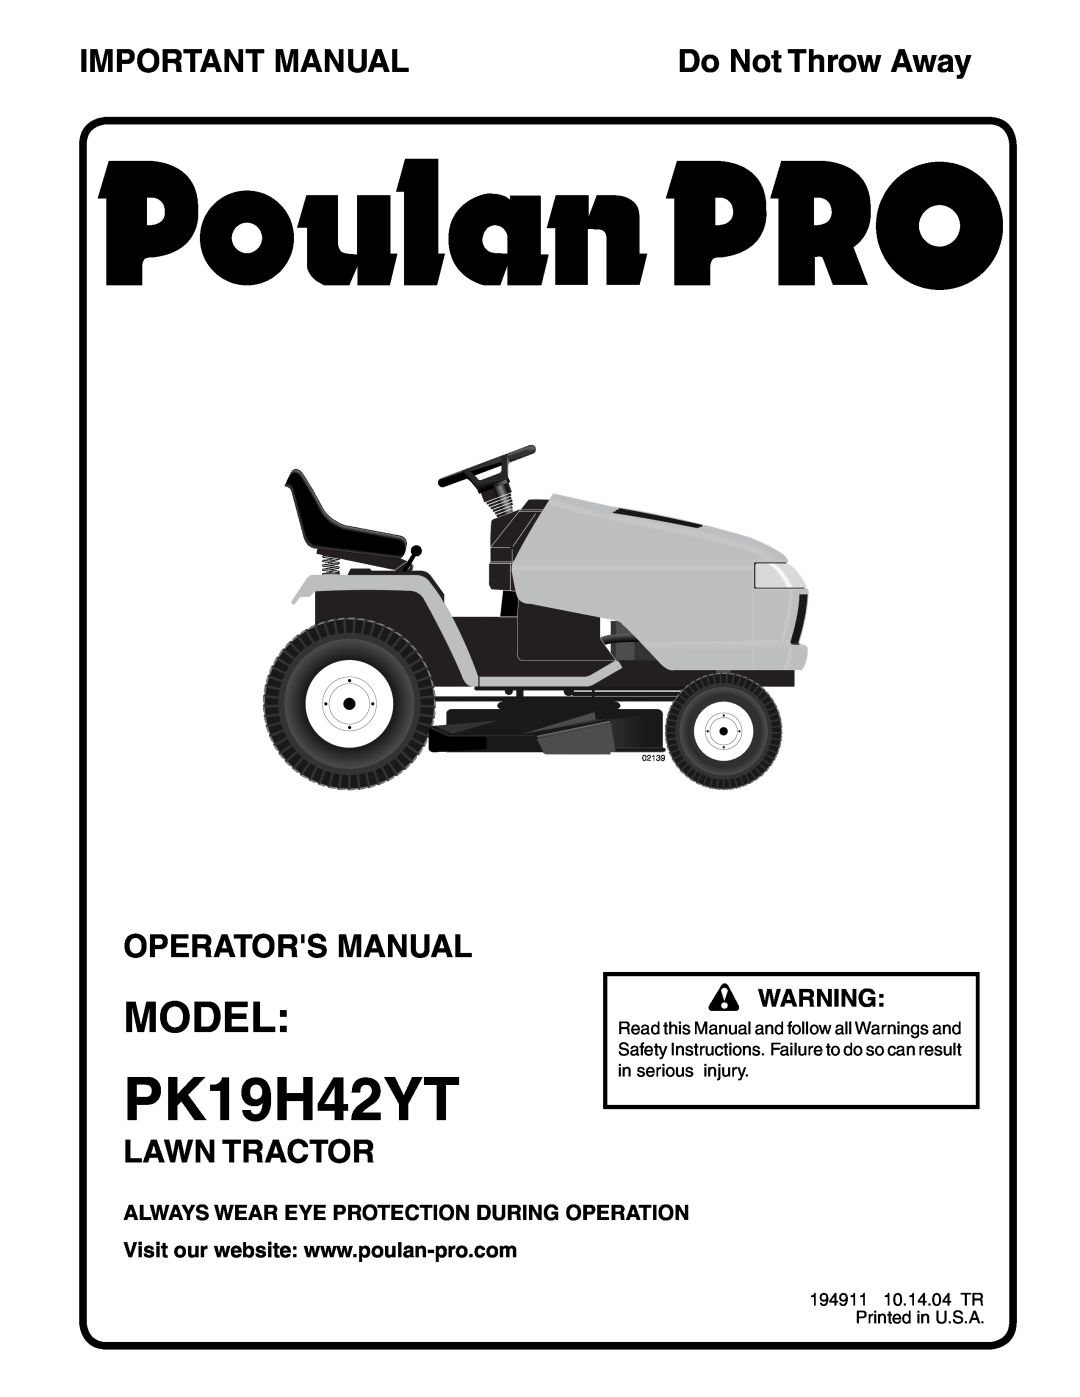 Poulan PK19H42YT manual Model, Important Manual, Operators Manual, Lawn Tractor, Do Not Throw Away, 02139 